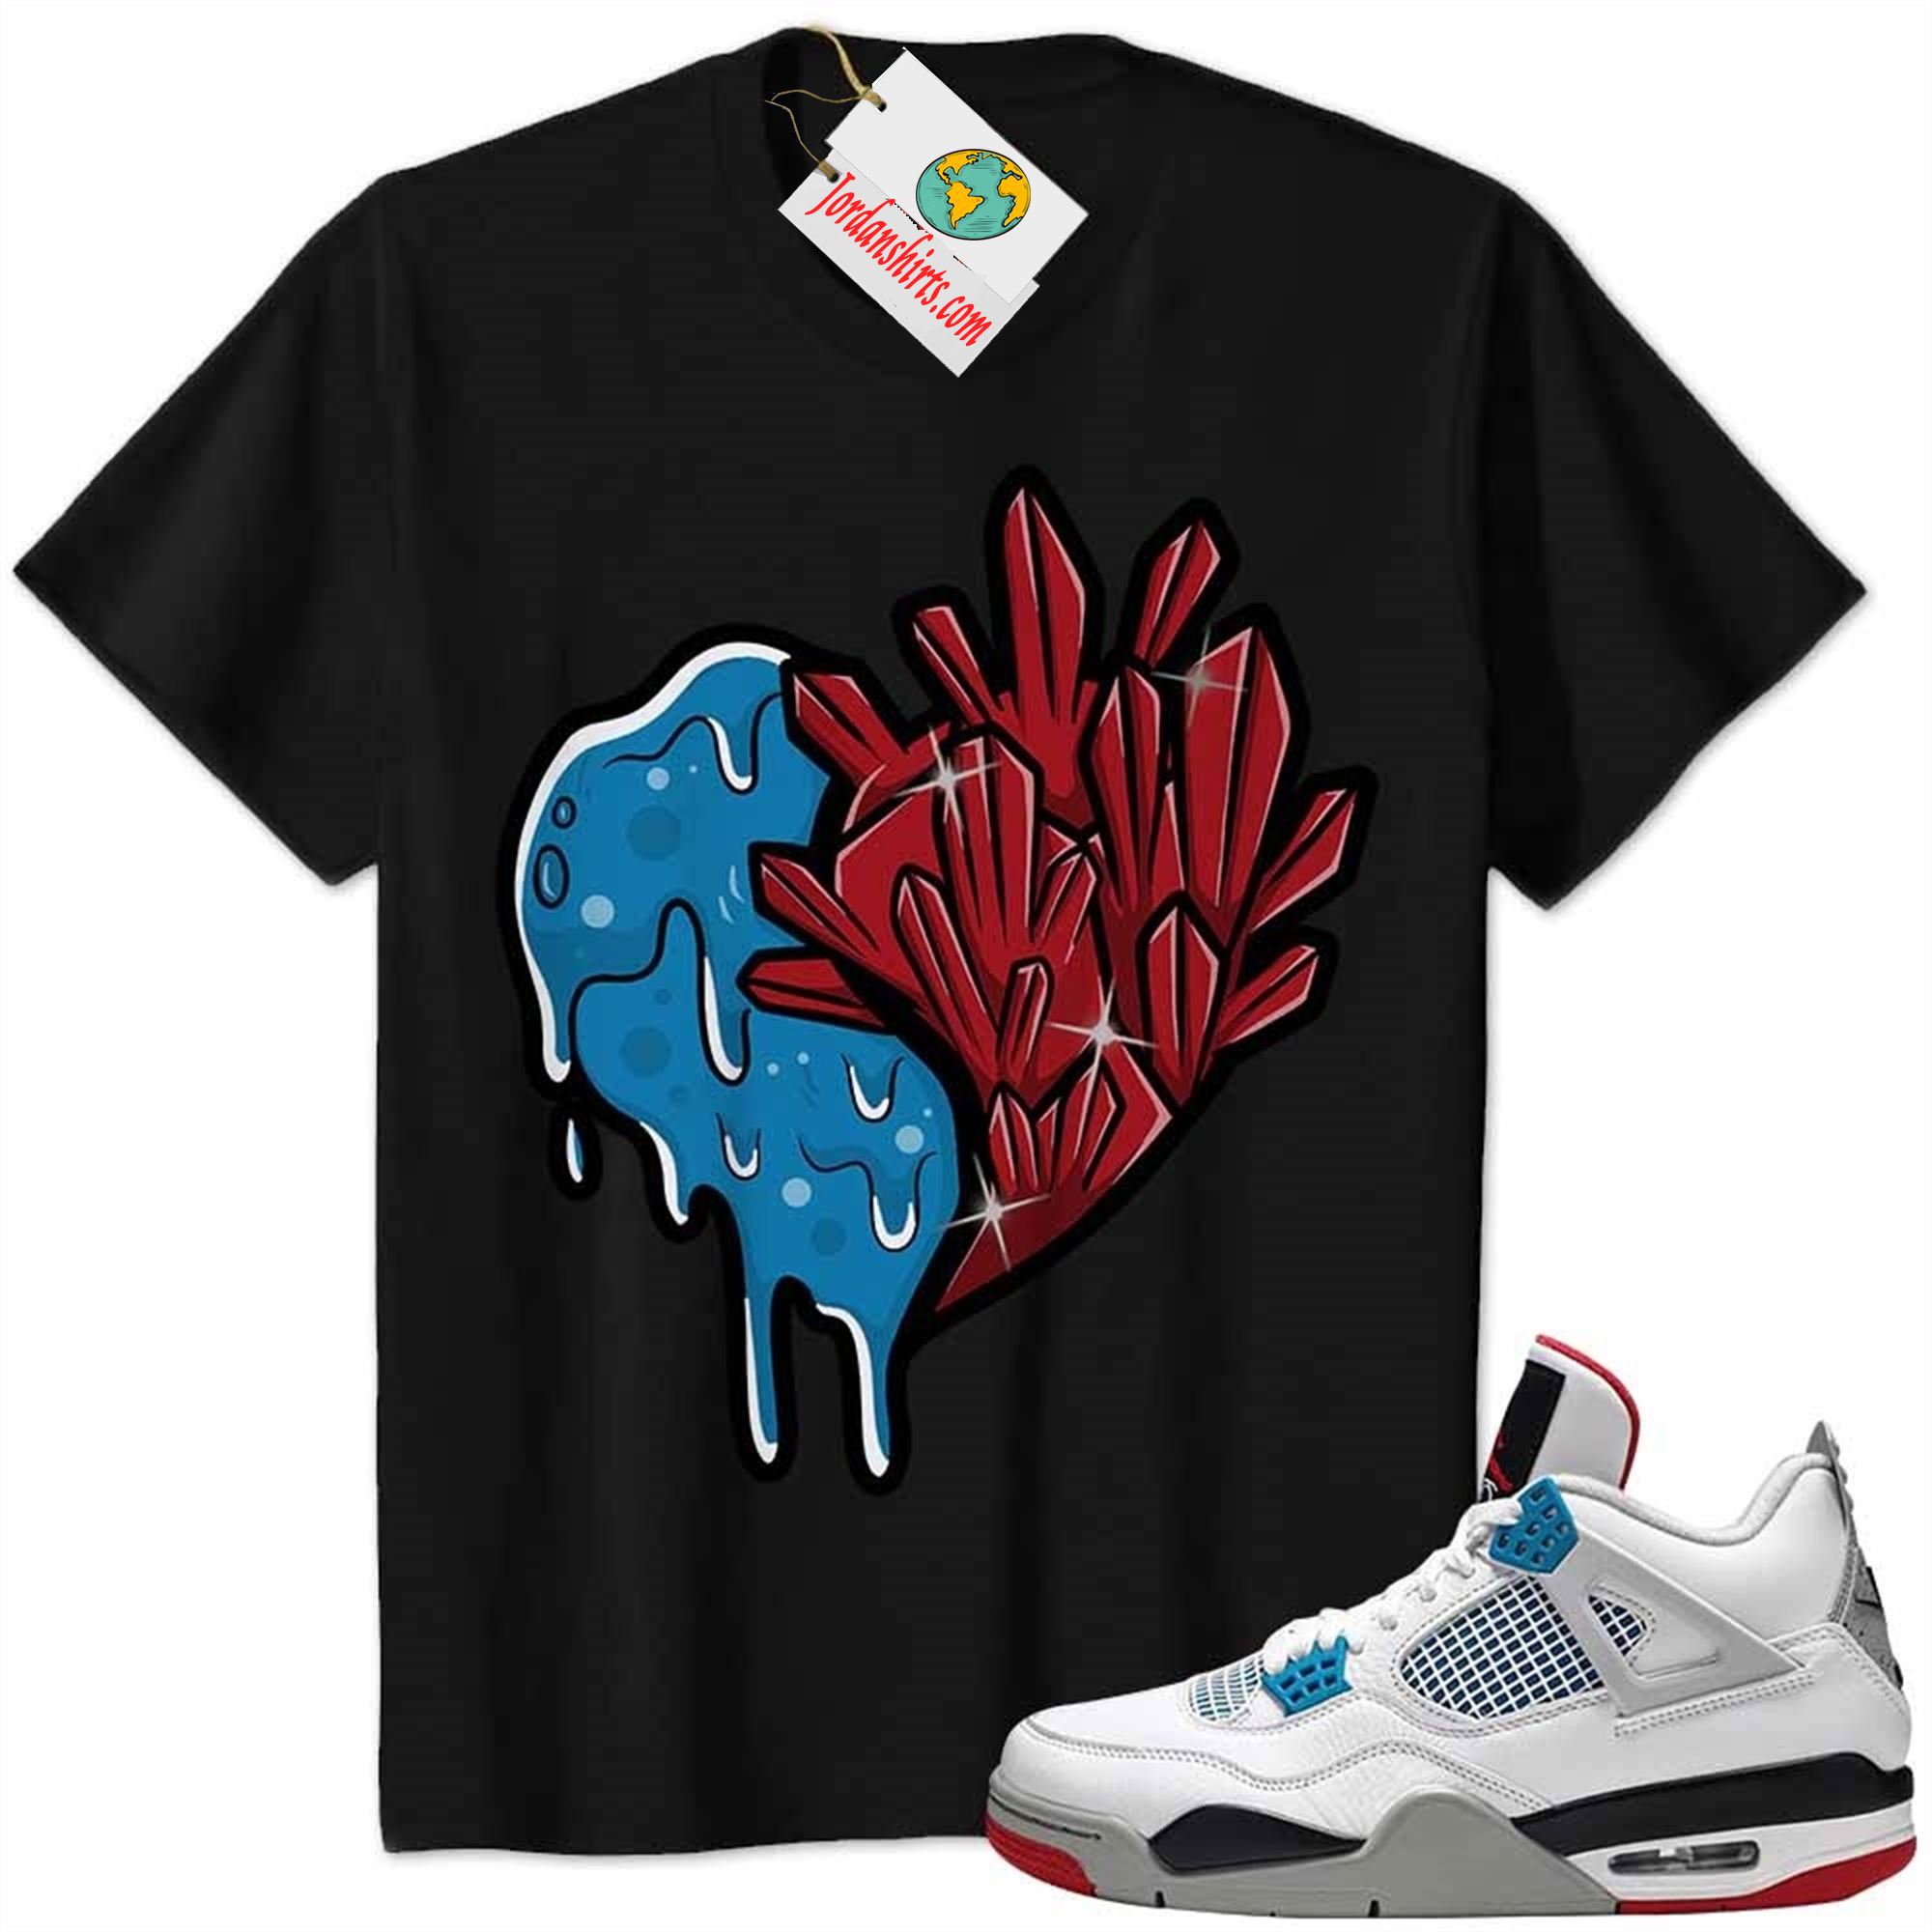 Jordan 4 Shirt, Crystal And Melt Heart Black Air Jordan 4 What The 4s Full Size Up To 5xl